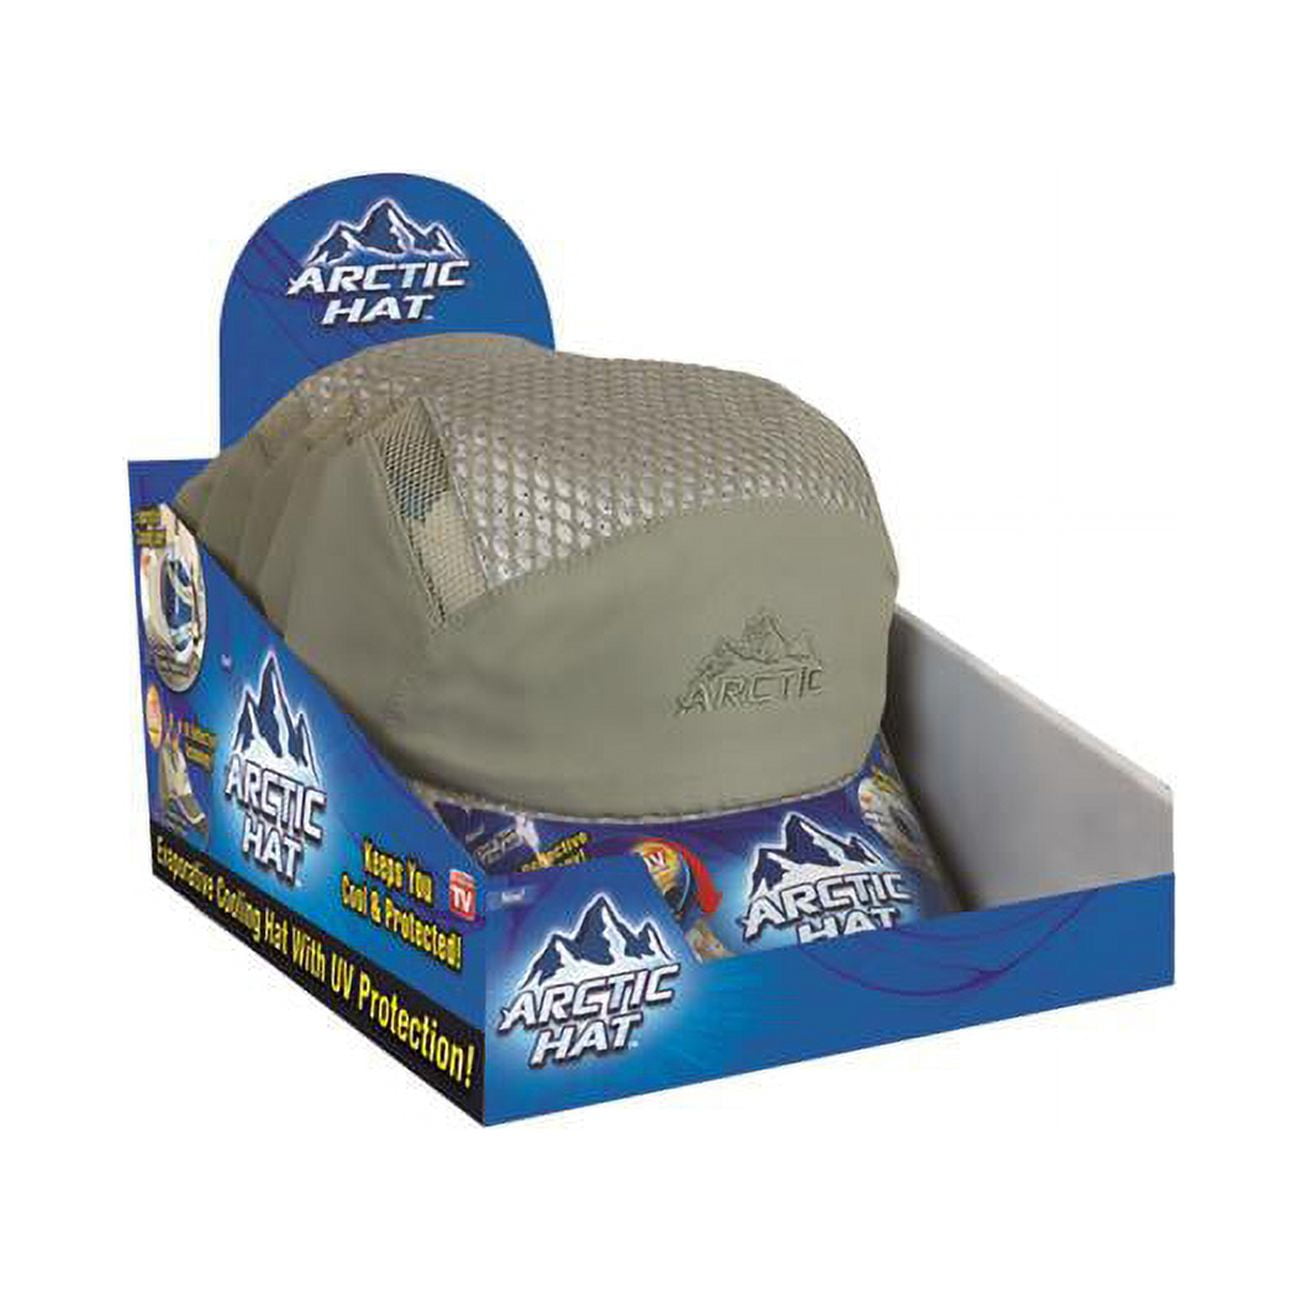 Arctic Hat Evaporative Polyester/Polyethylene Cooling Cap, 1 ct